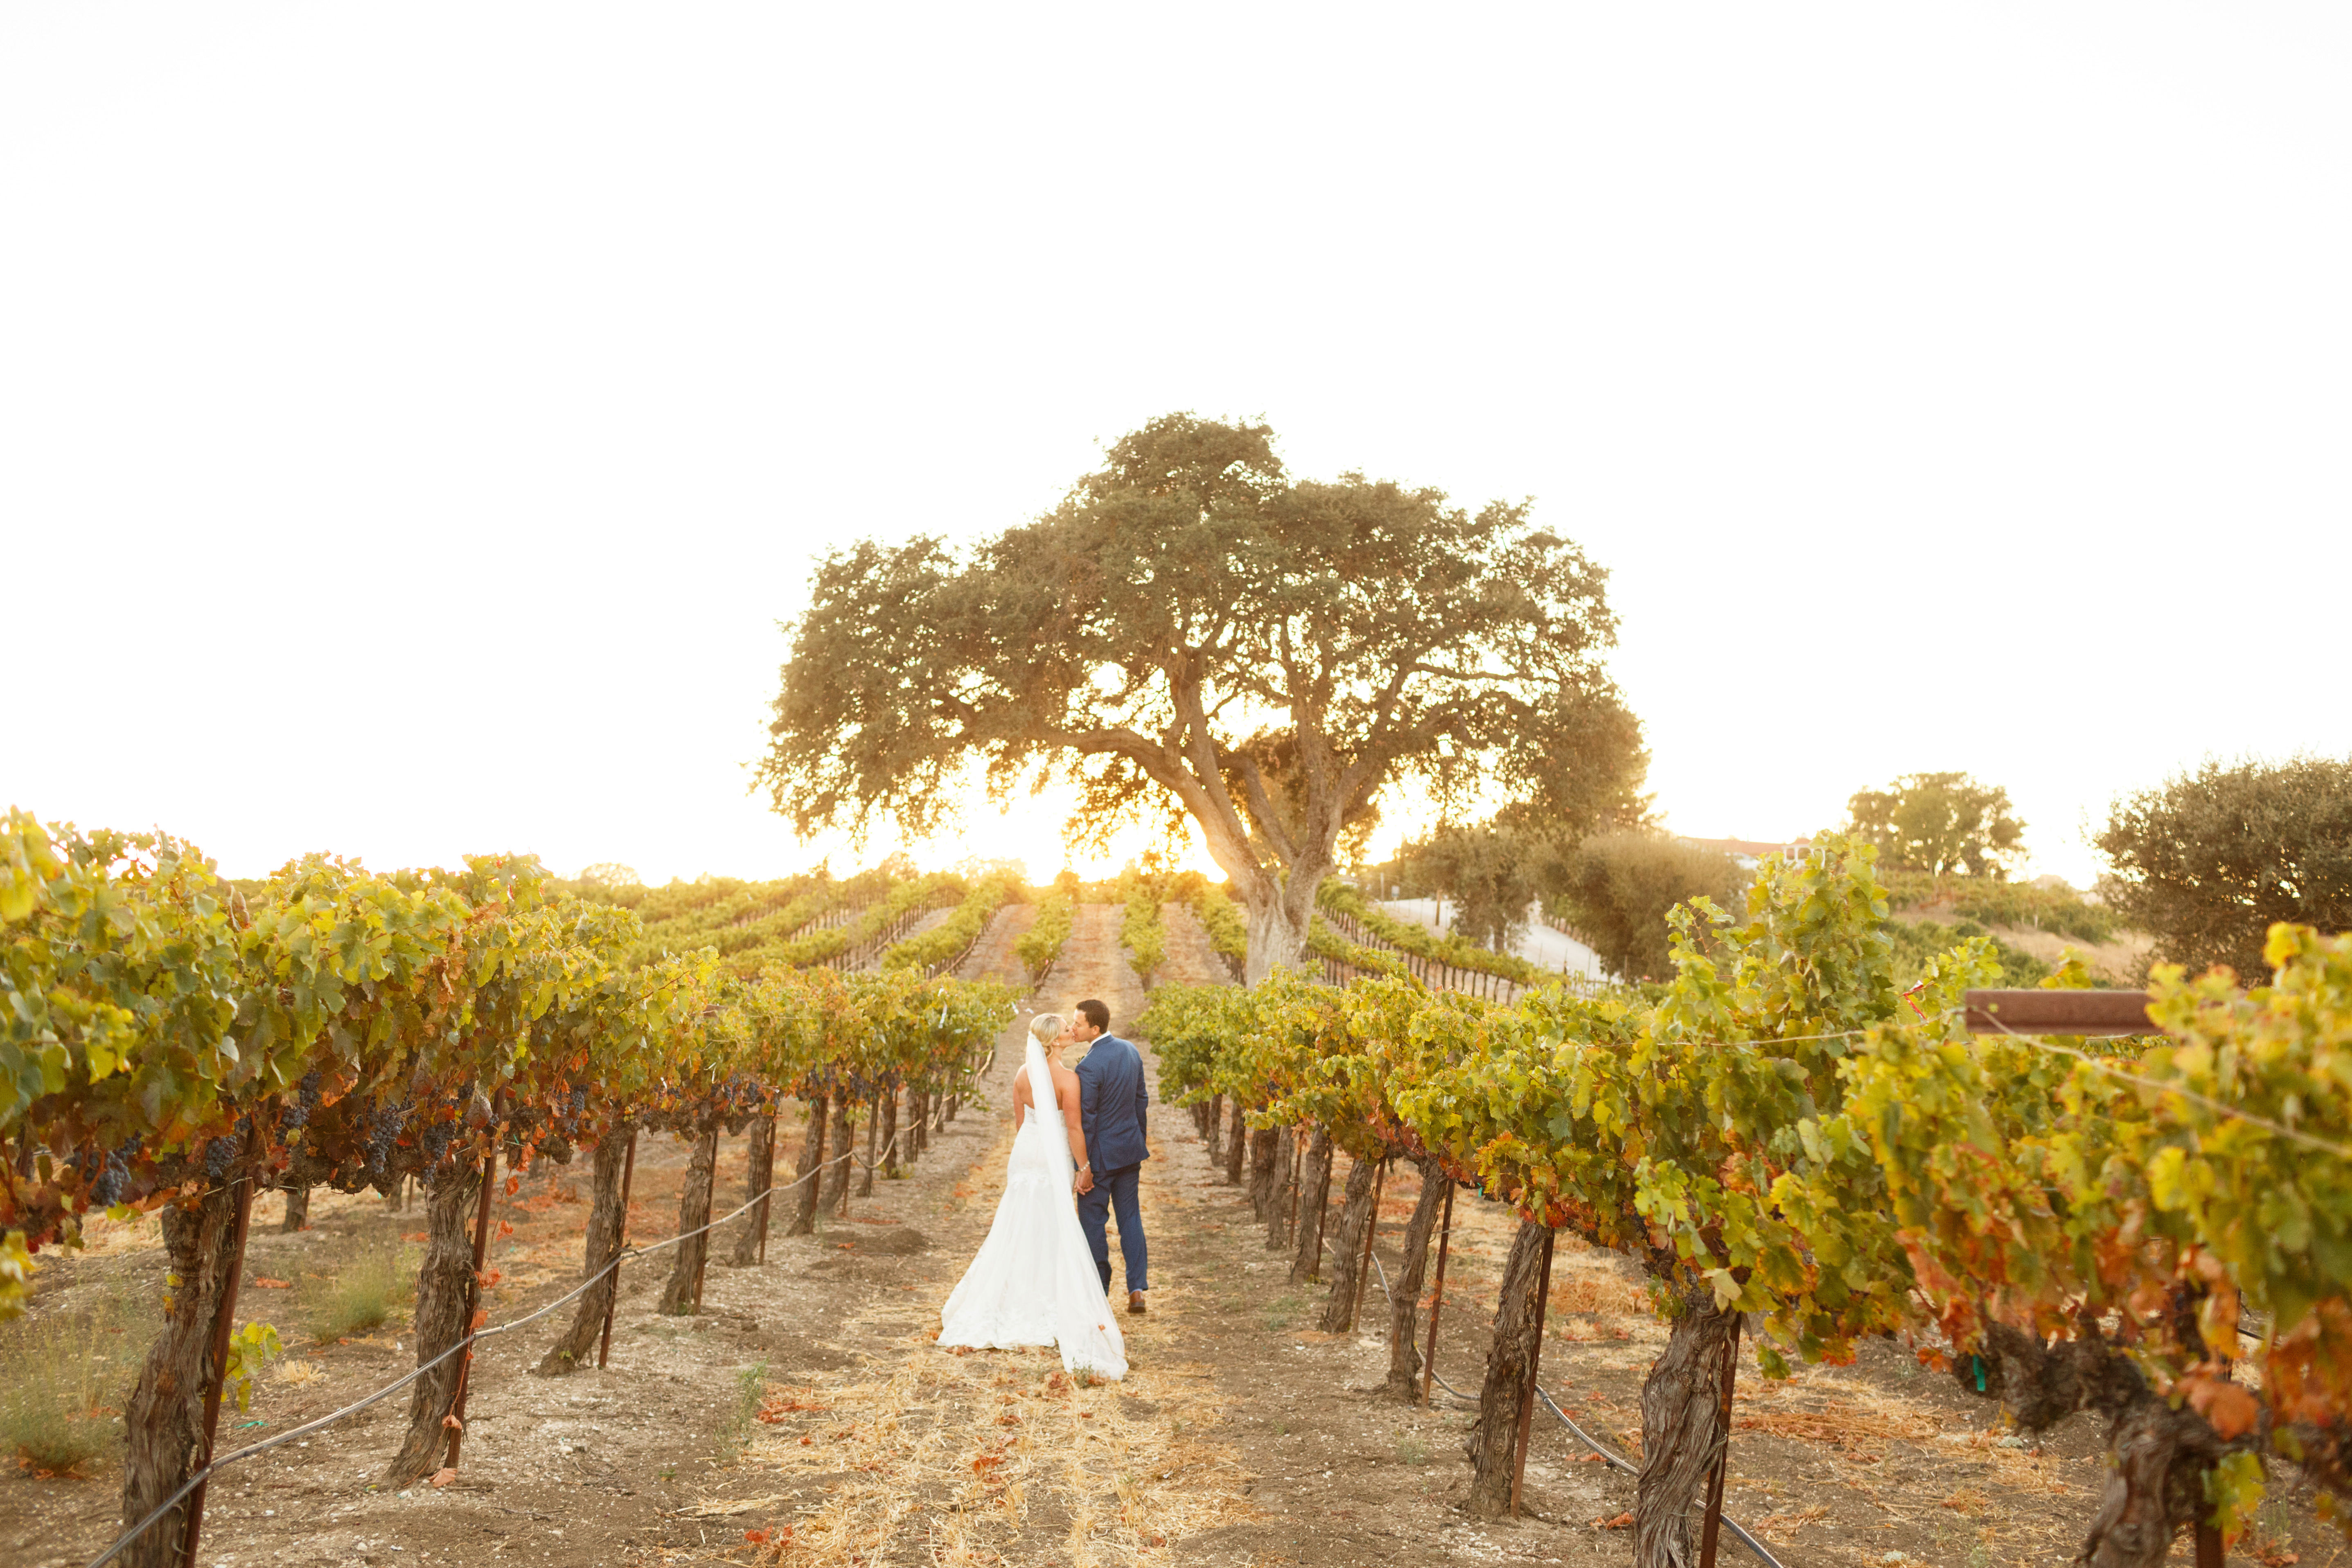 Central Coast Vineyard Wedding Venues - Terra Mia Vineyard